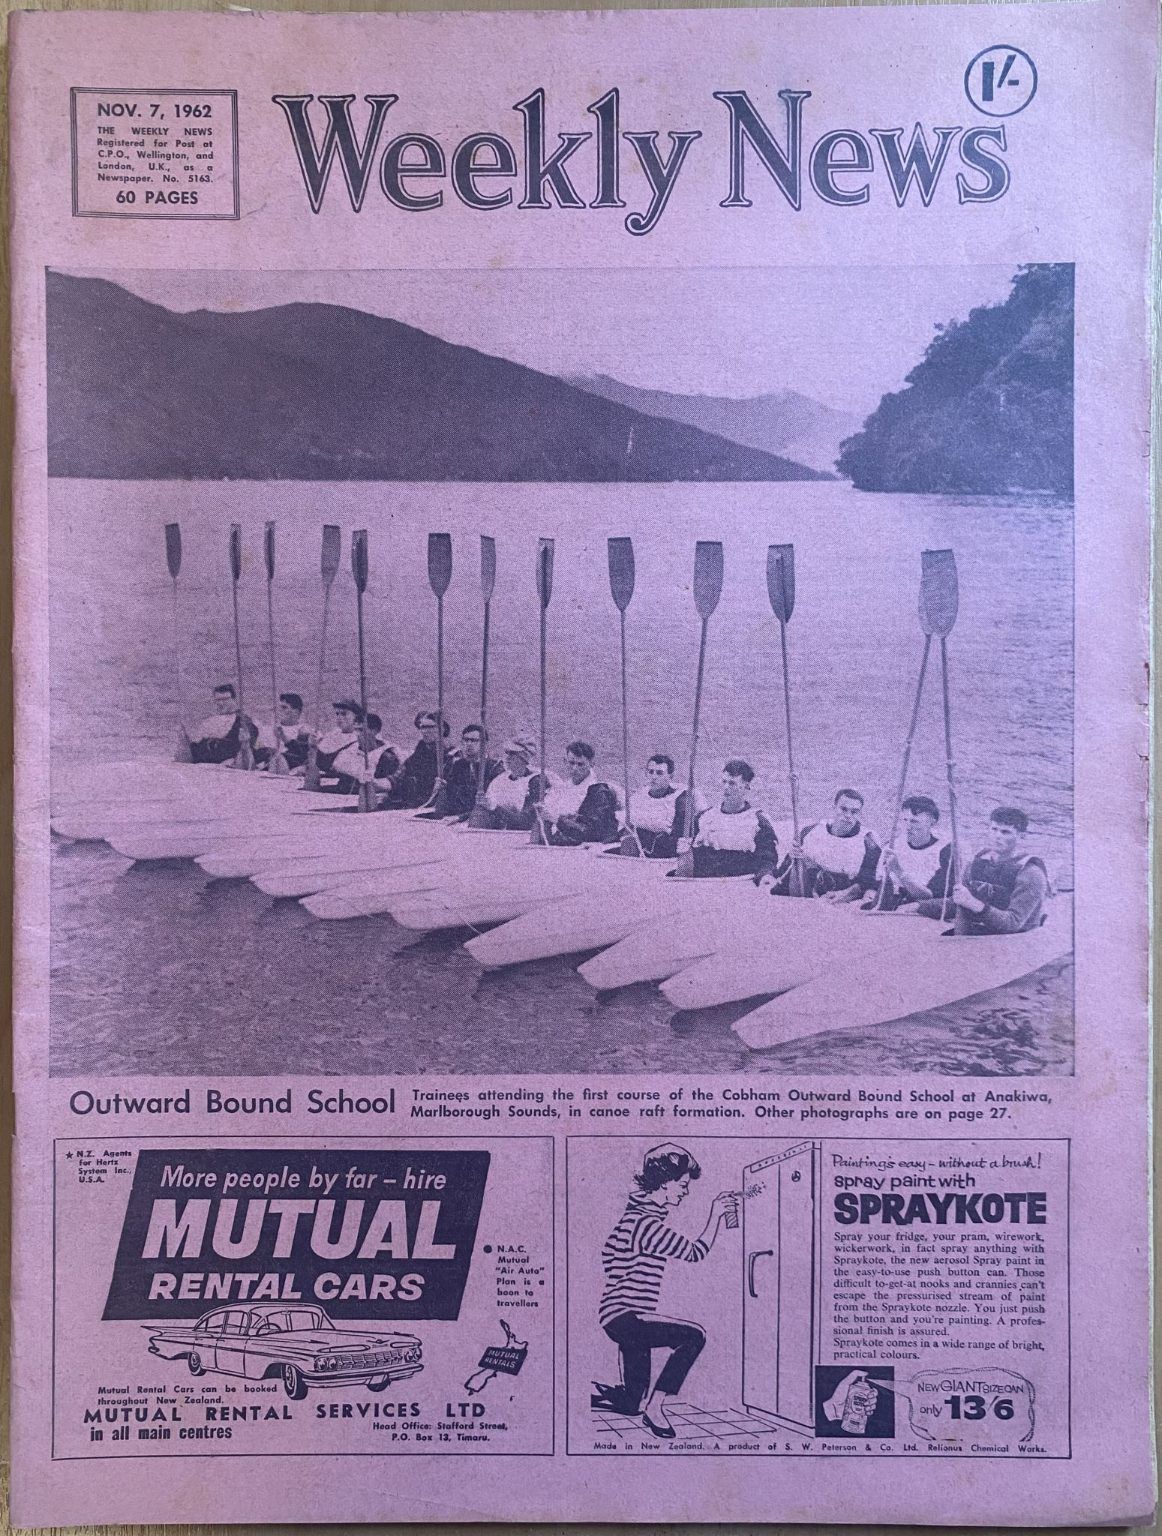 OLD NEWSPAPER: The Weekly News, No. 5163, 7 November 1962